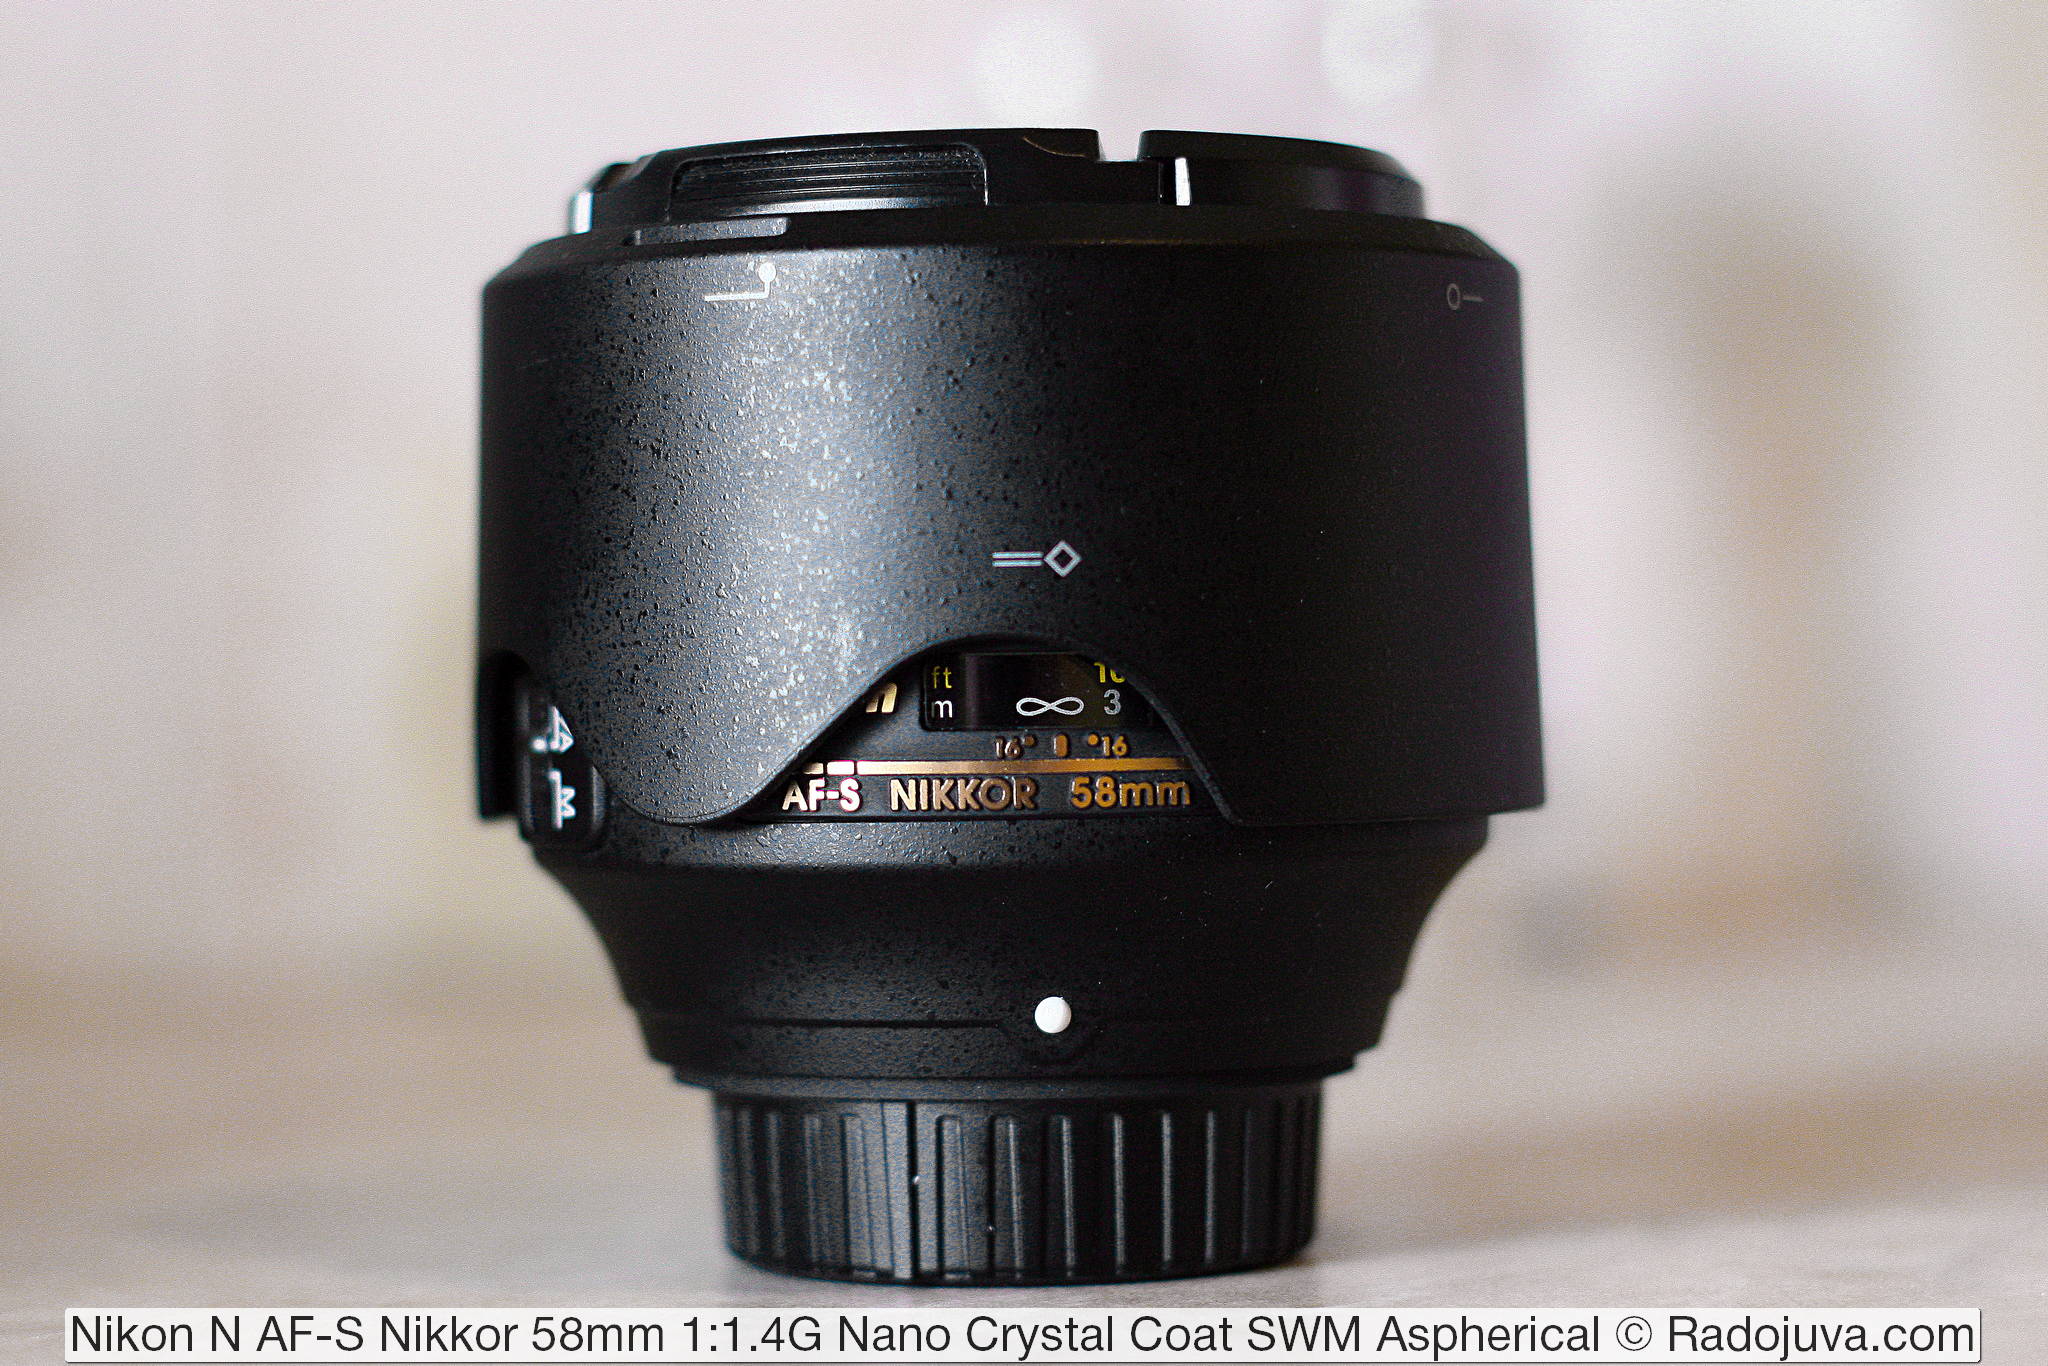 Nikon N AF-S Nikkor 58mm 1:1.4G Nano Crystal Coat SWM Aspherical